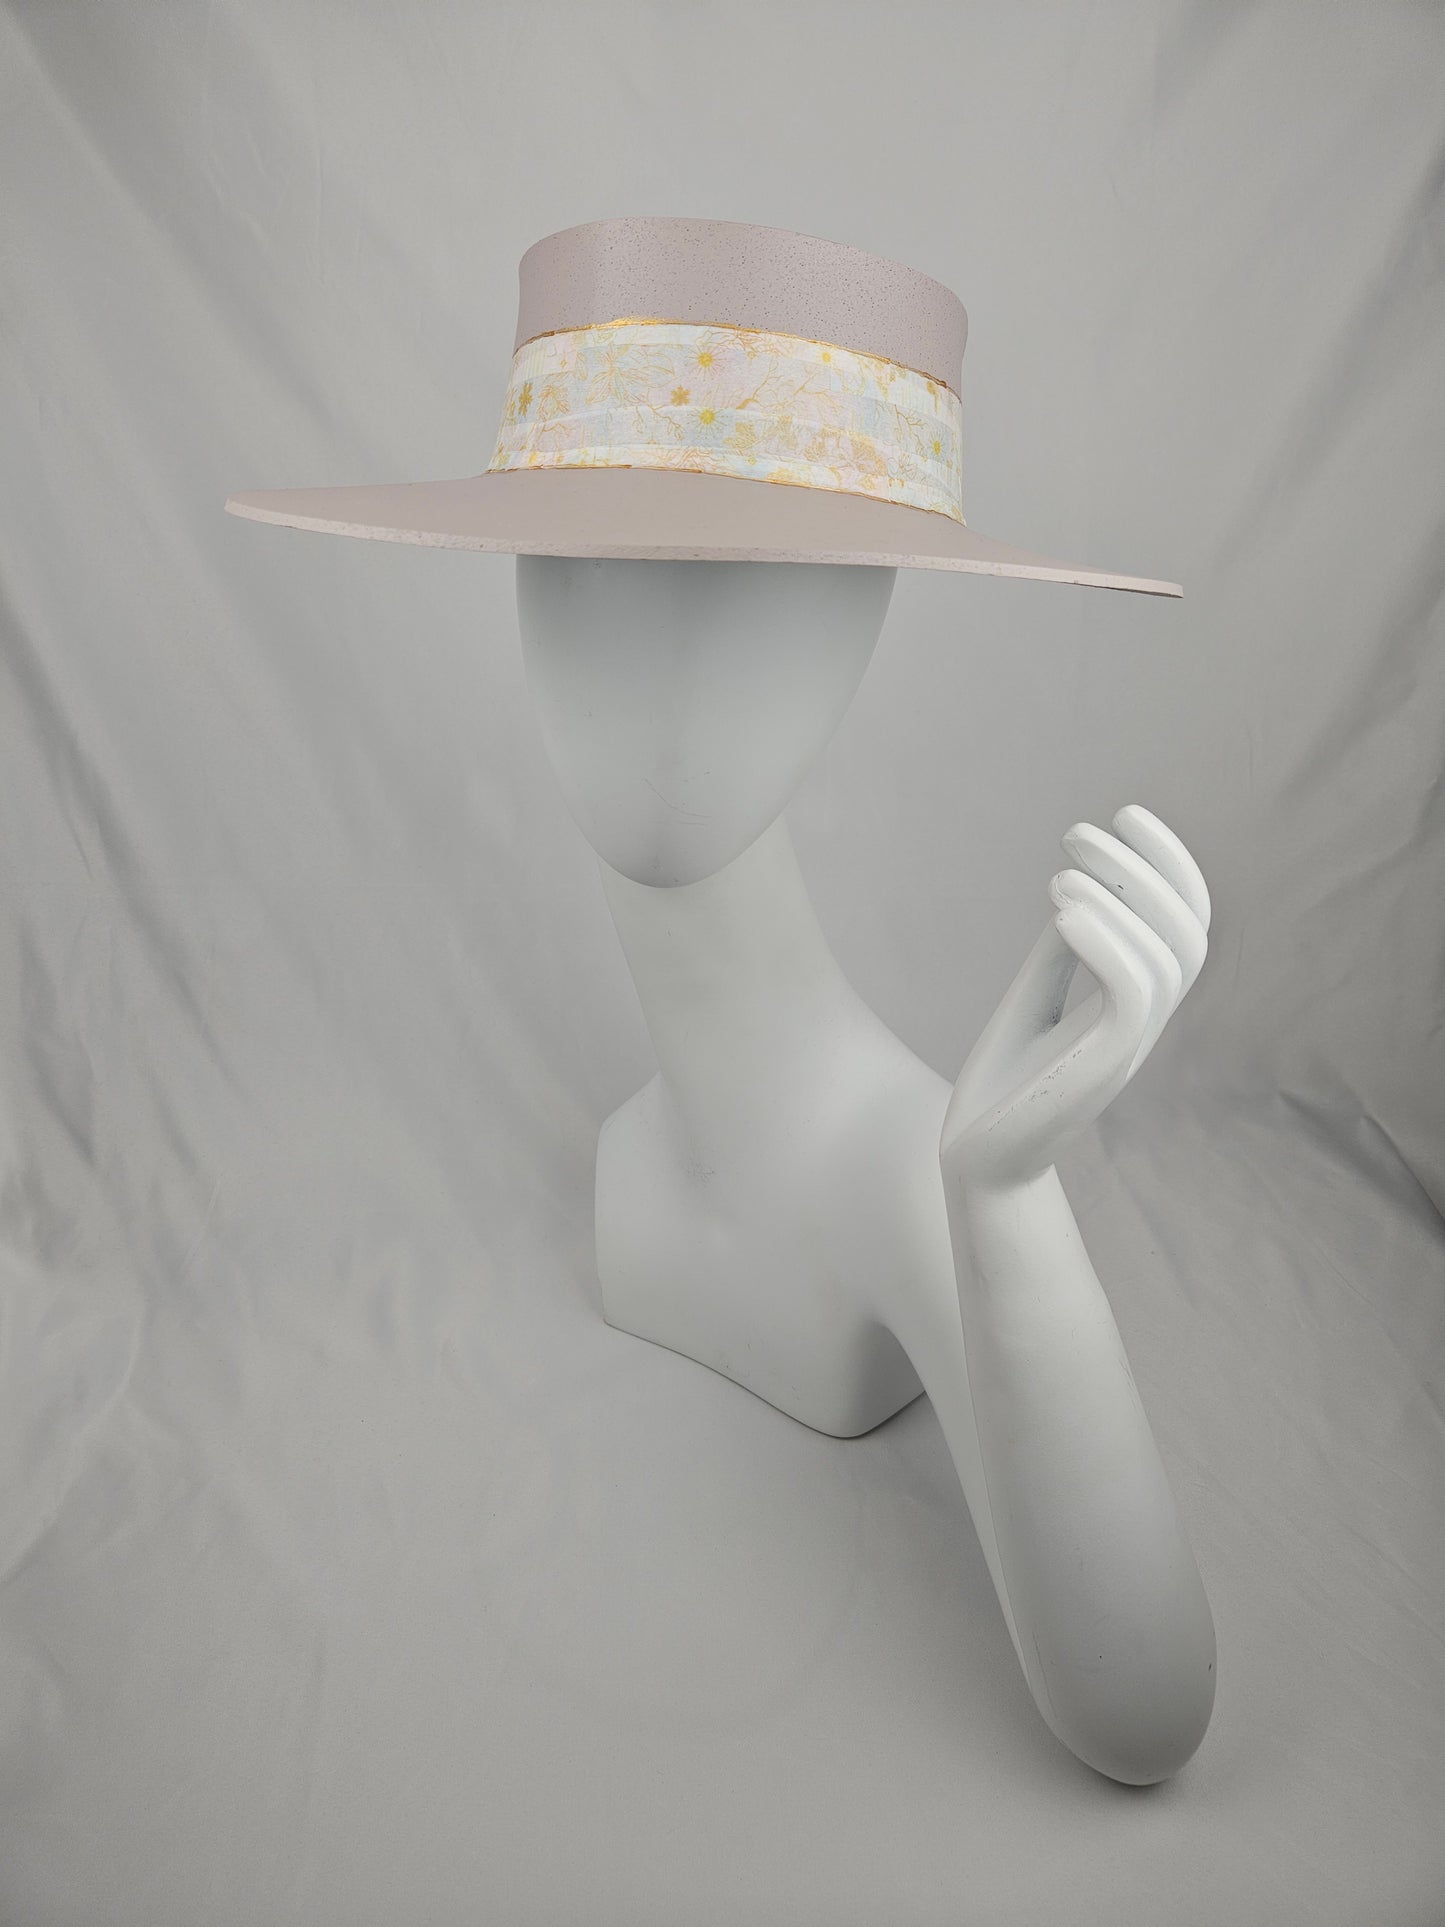 Tall Soft Pink Audrey Sun Visor Hat with Soft Pink Floral Band: 1950s, Walks, Brunch, Asian, Golf, Easter, Church, No Headache, Derby